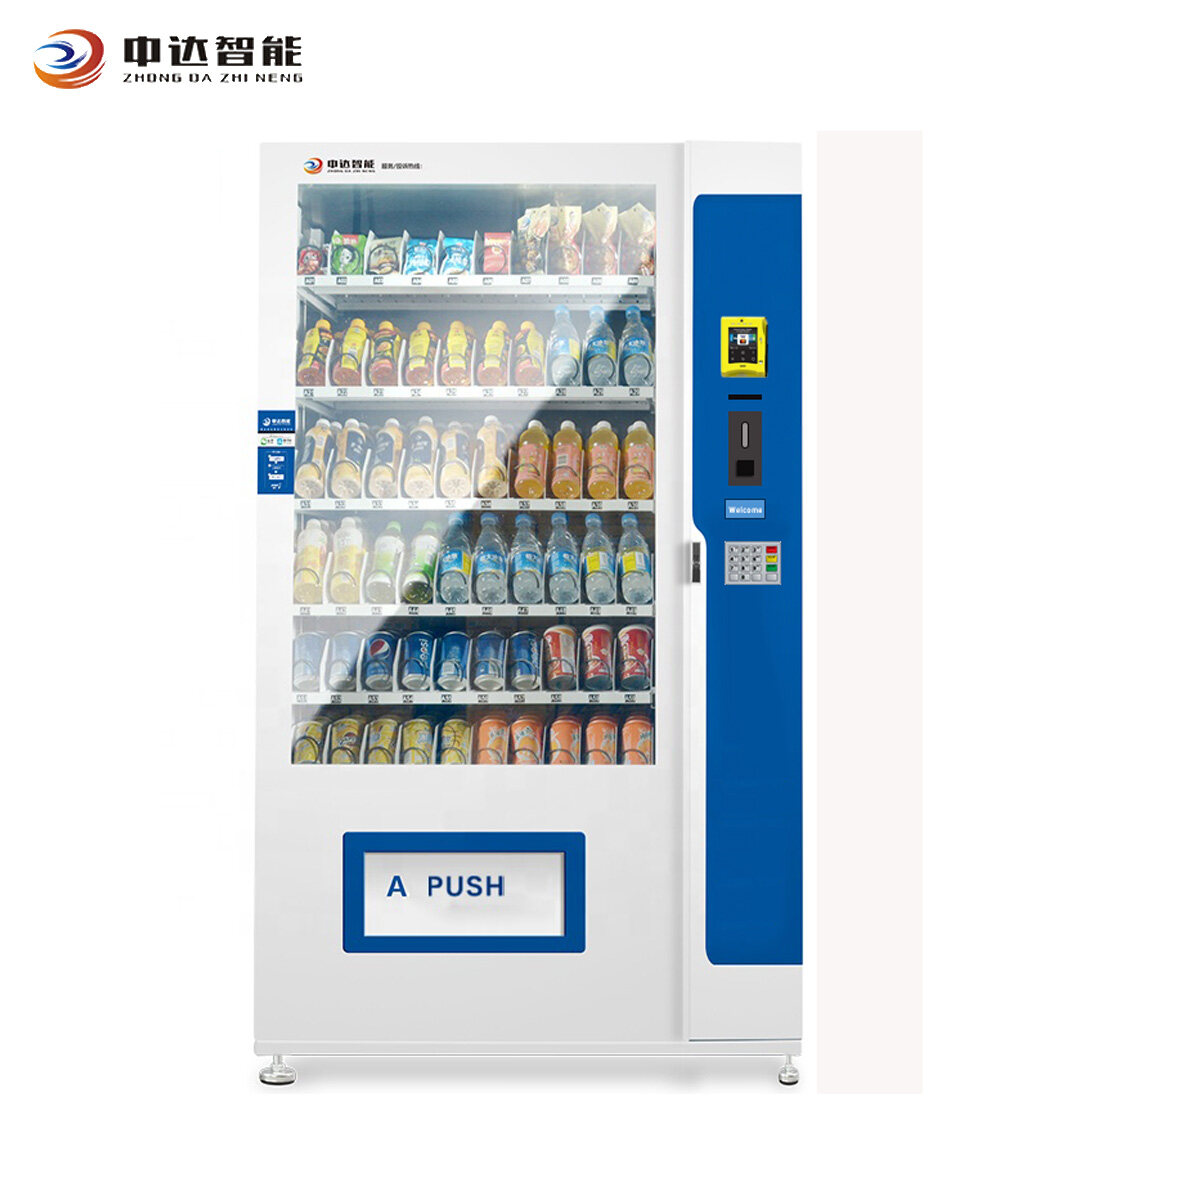 snack and drink vending machine modern vending machine